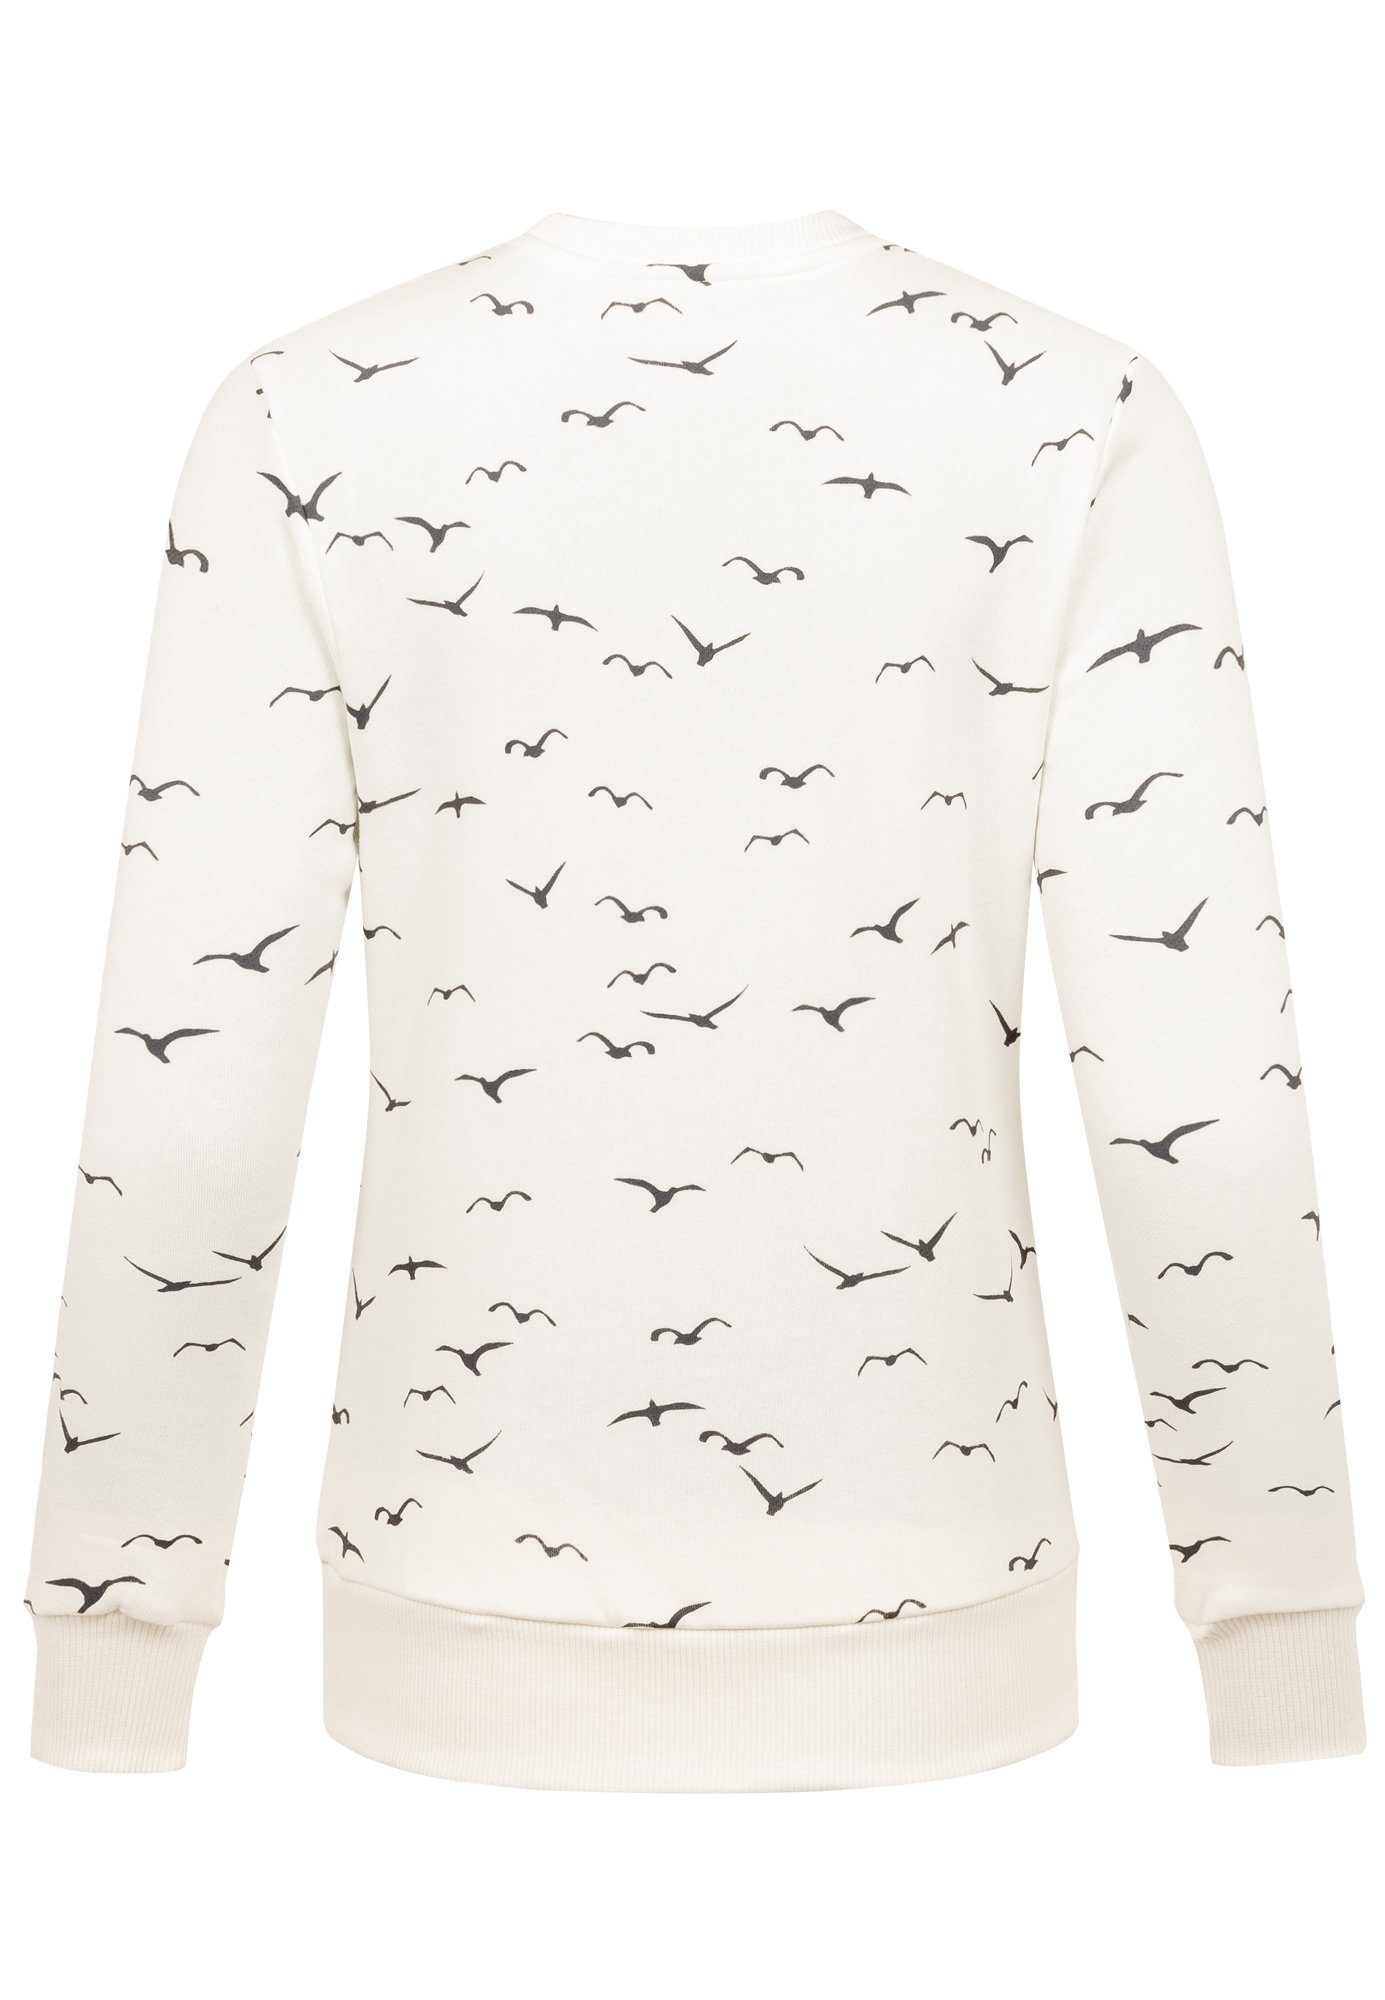 Damen ANA Weiß Hoodie Kapuzenpullover REPUBLIX Sweatshirt Print Pullover Sweatjacke